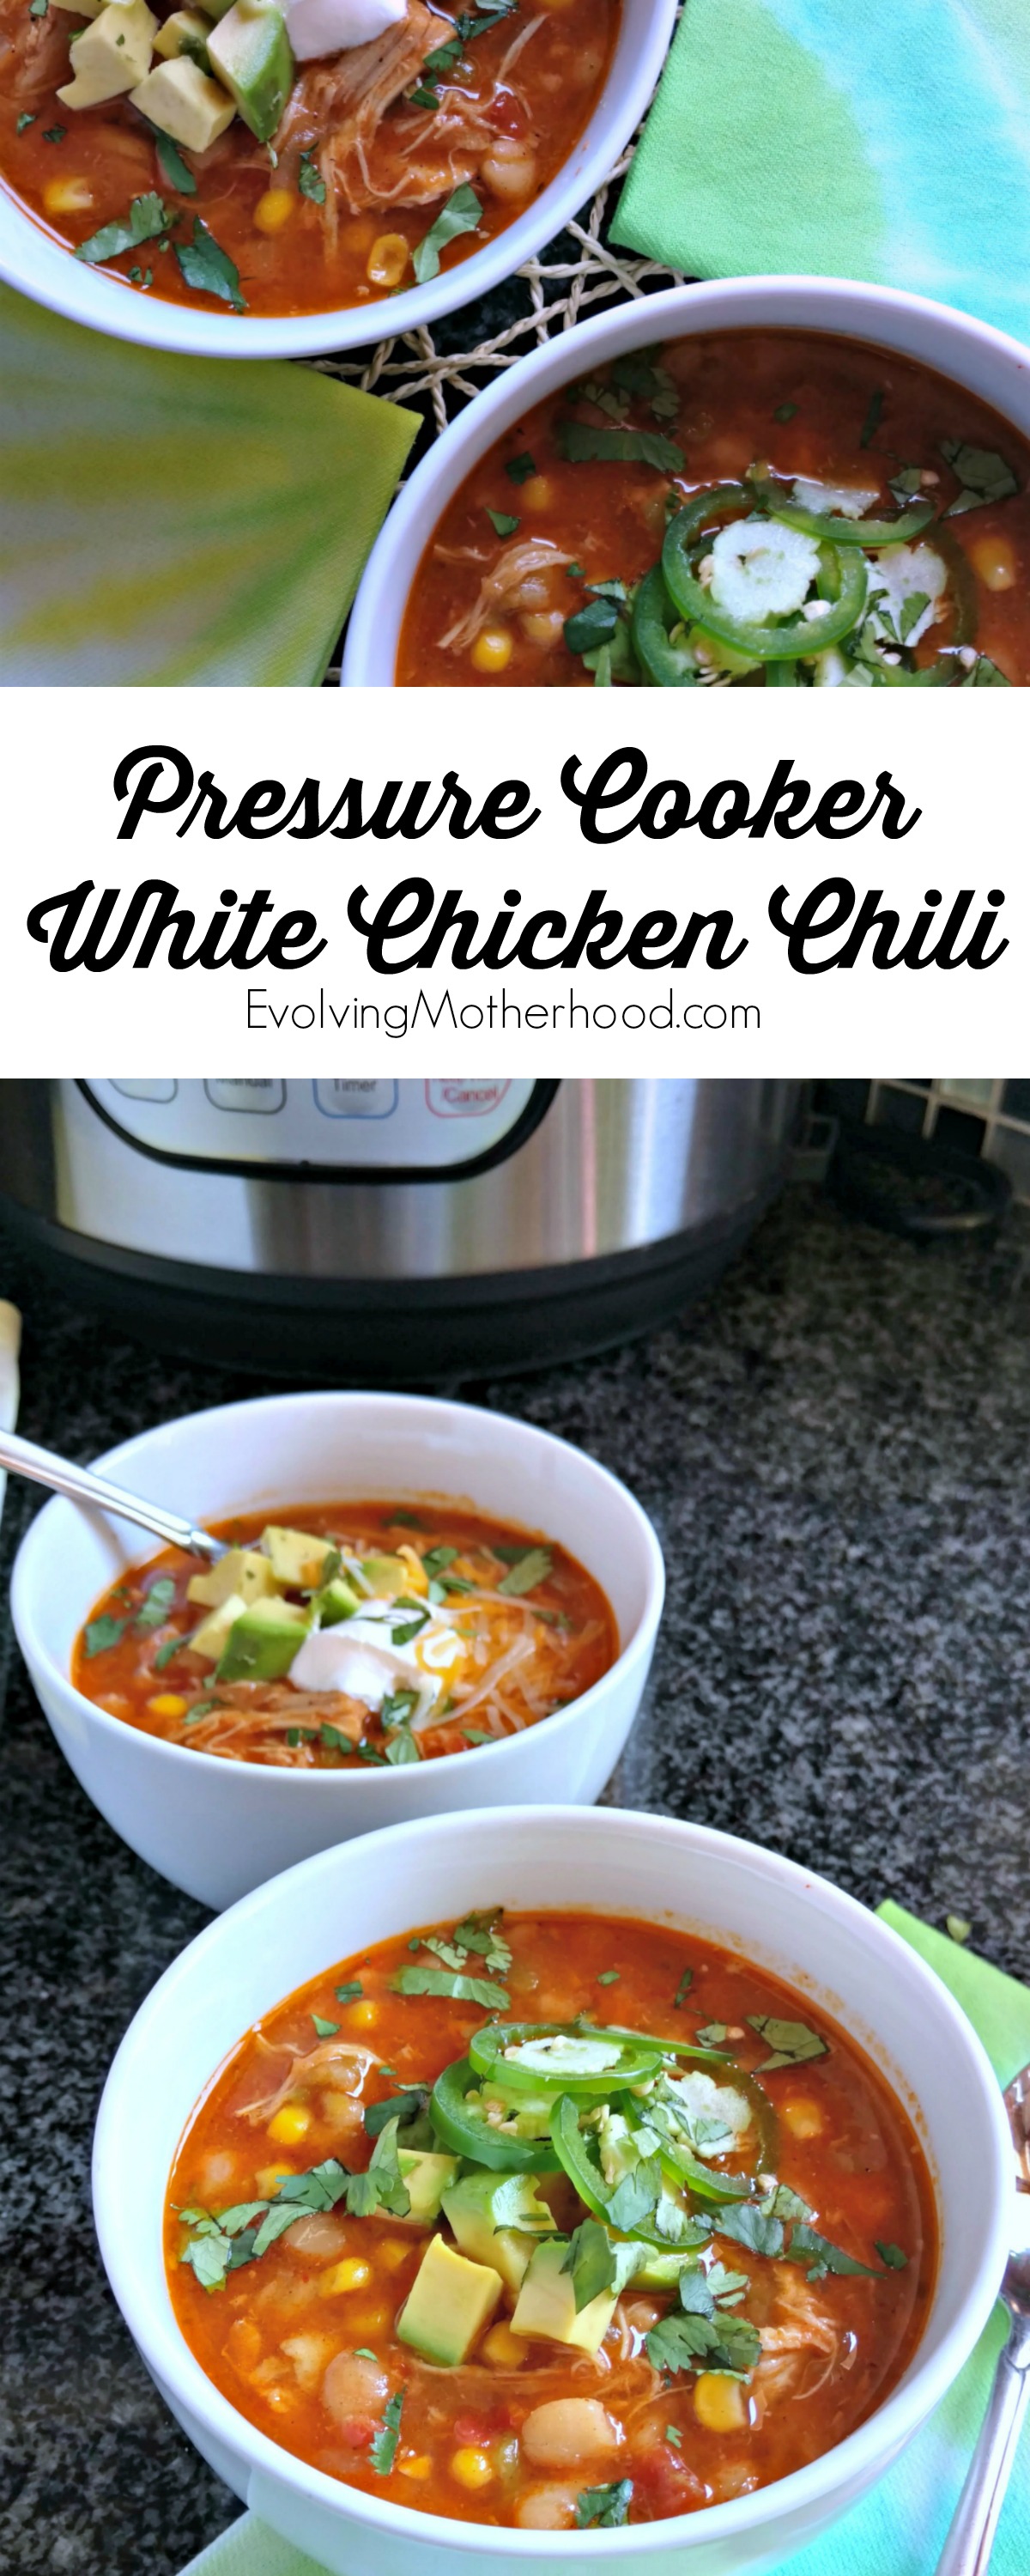 Pressure Cooker Chicken Chili Recipe - Evolving Motherhood